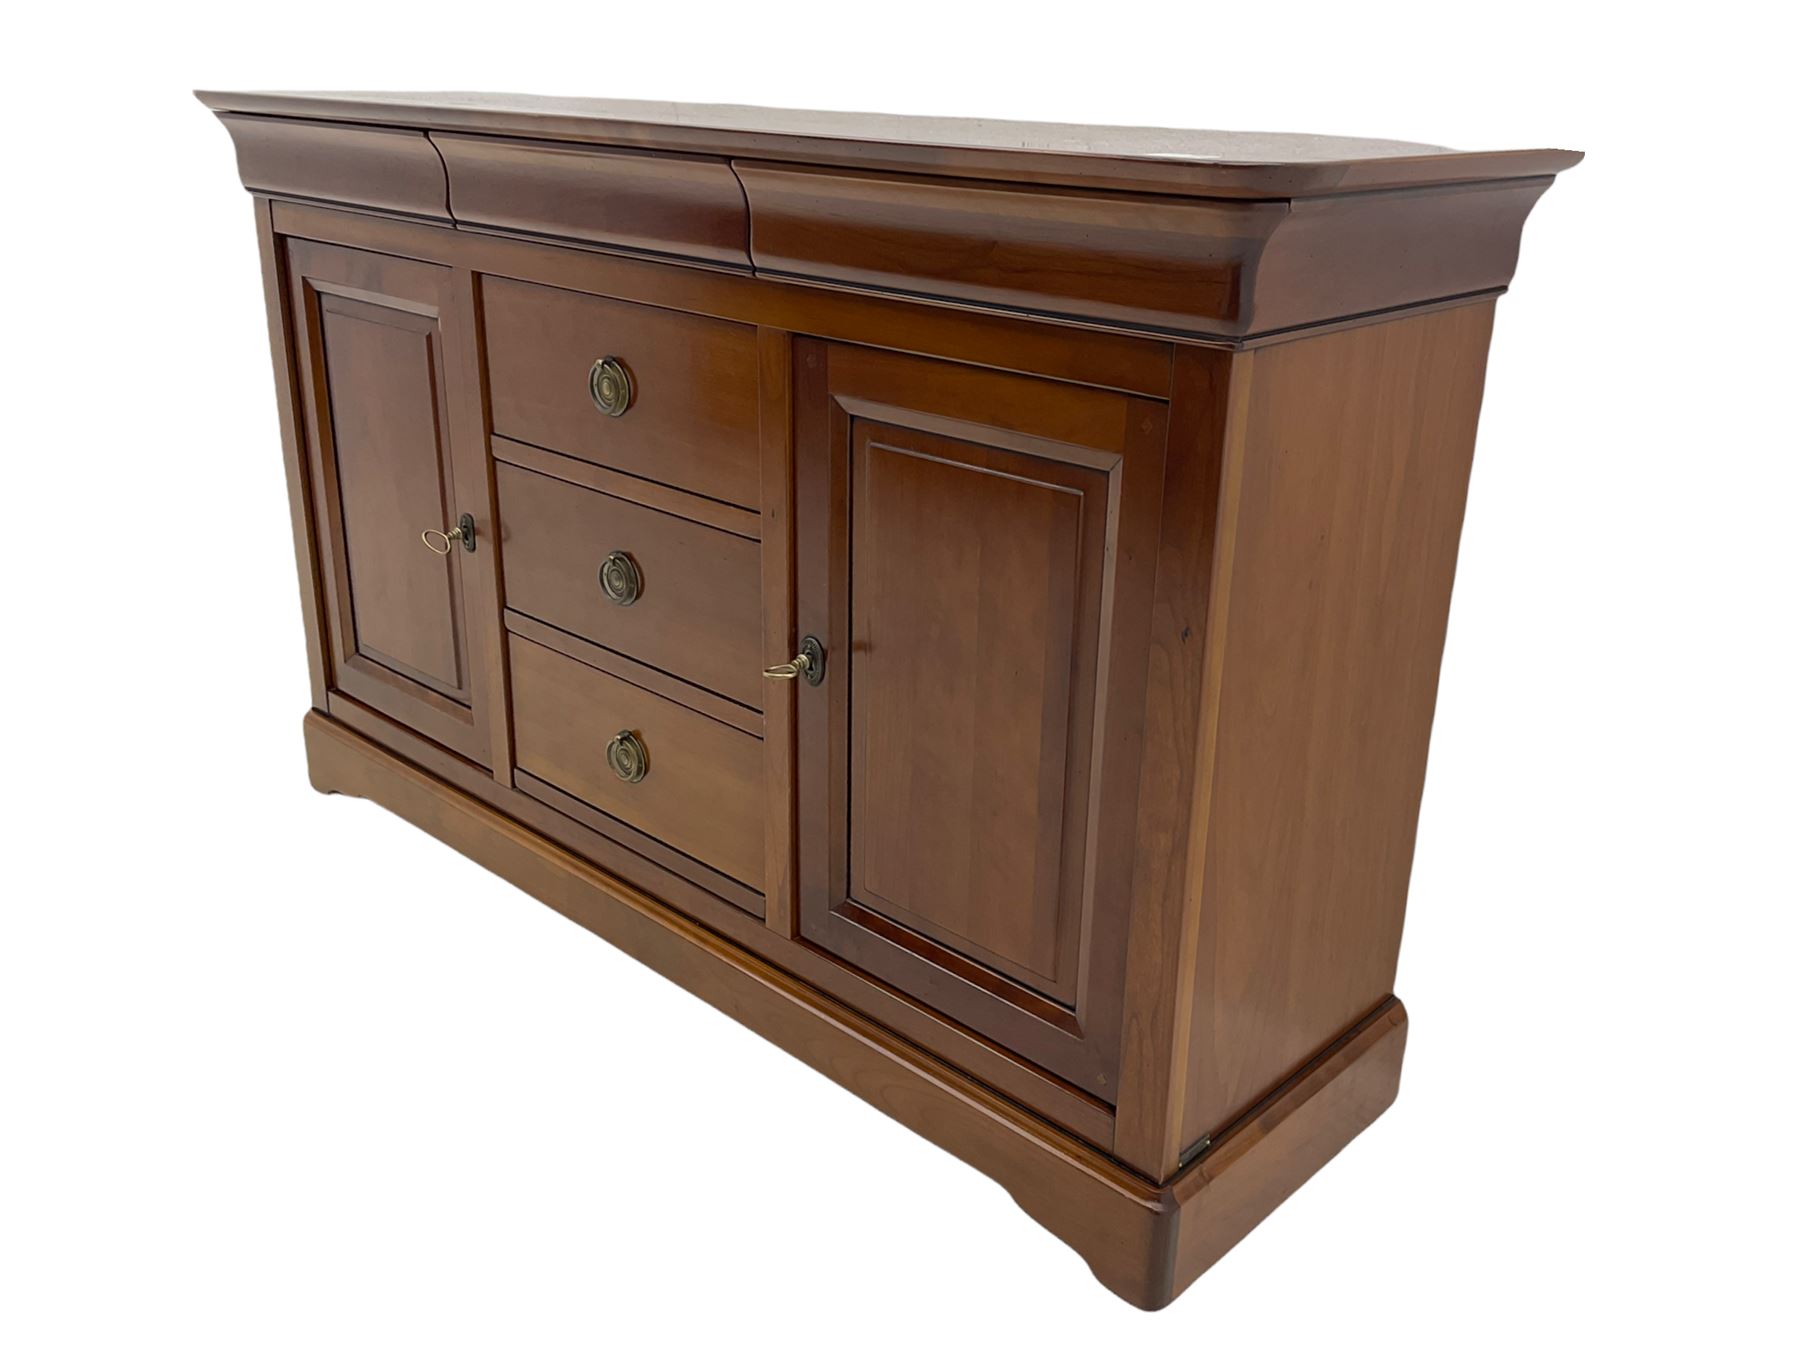 Grange Furniture cherry wood sideboard - Image 4 of 9